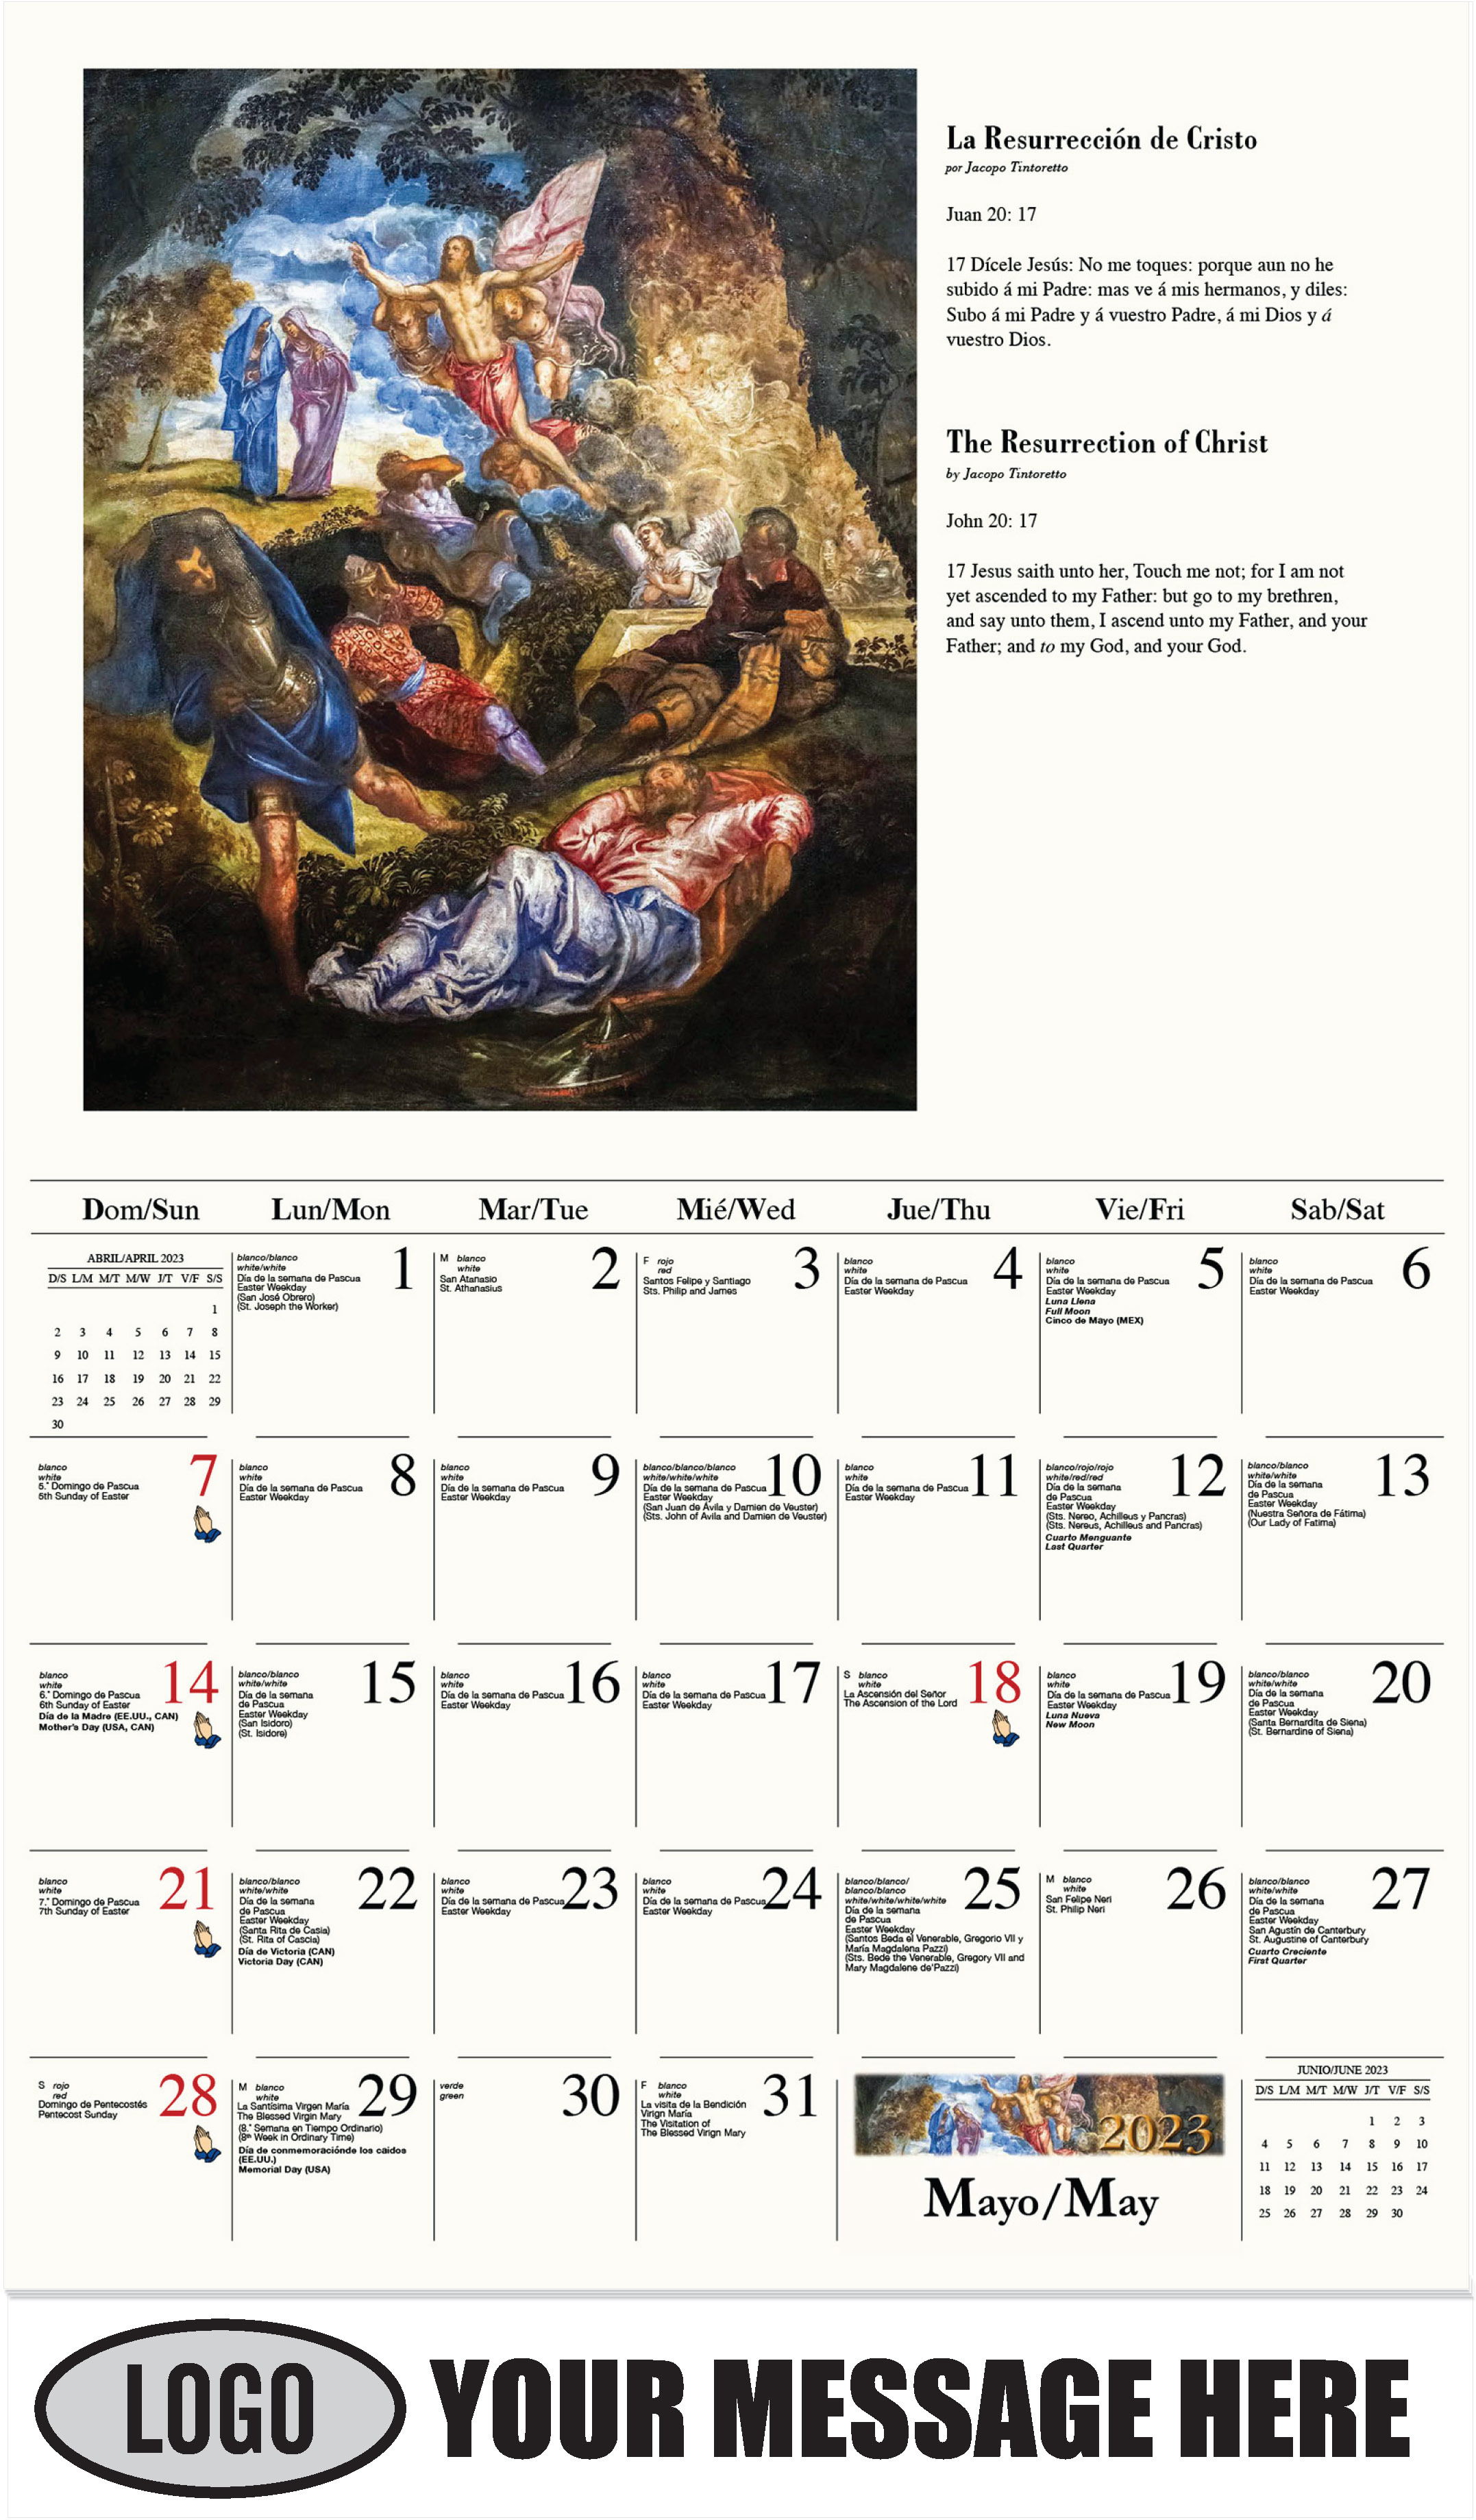 La resurrección de Cristo por Jacopo Tintoretto - May - Catholic Inspiration (Spanish-English bilingual) 2023 Promotional Calendar